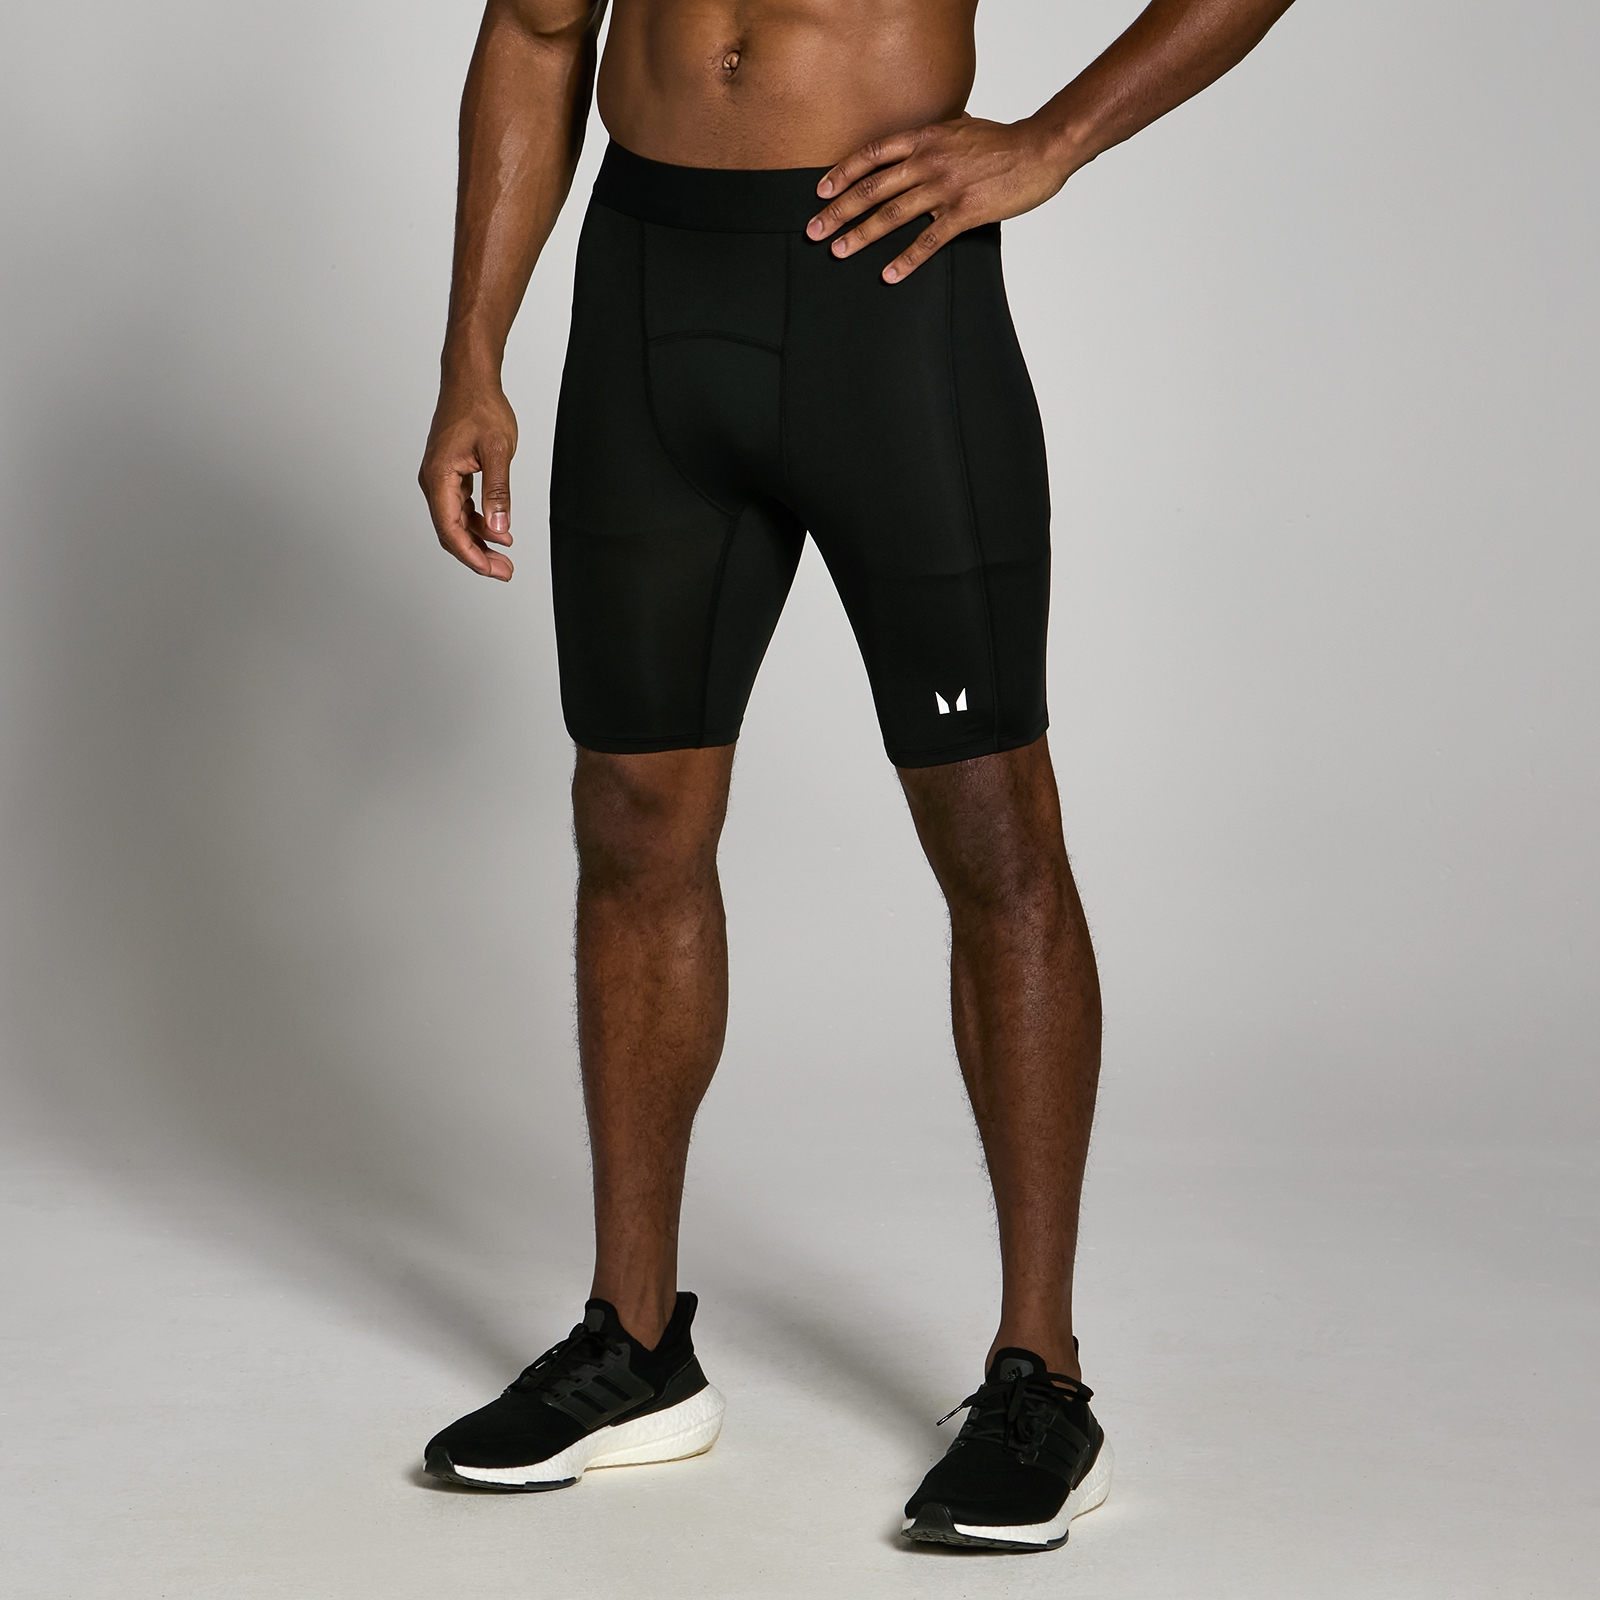 MP Men's Training Base Layer Shorts - Black - XS